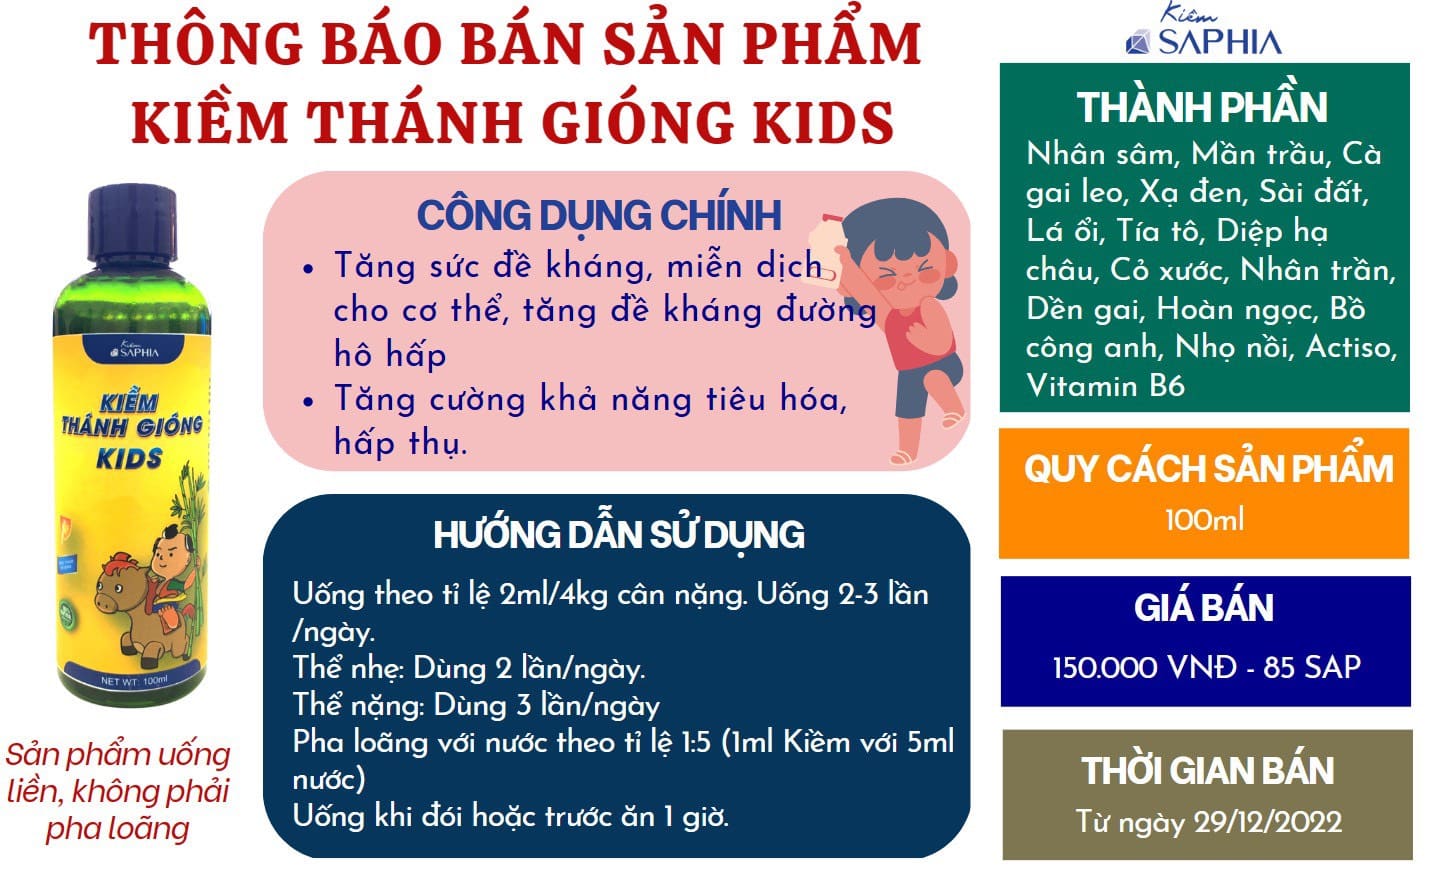 KIEM THANH GIONG Kids